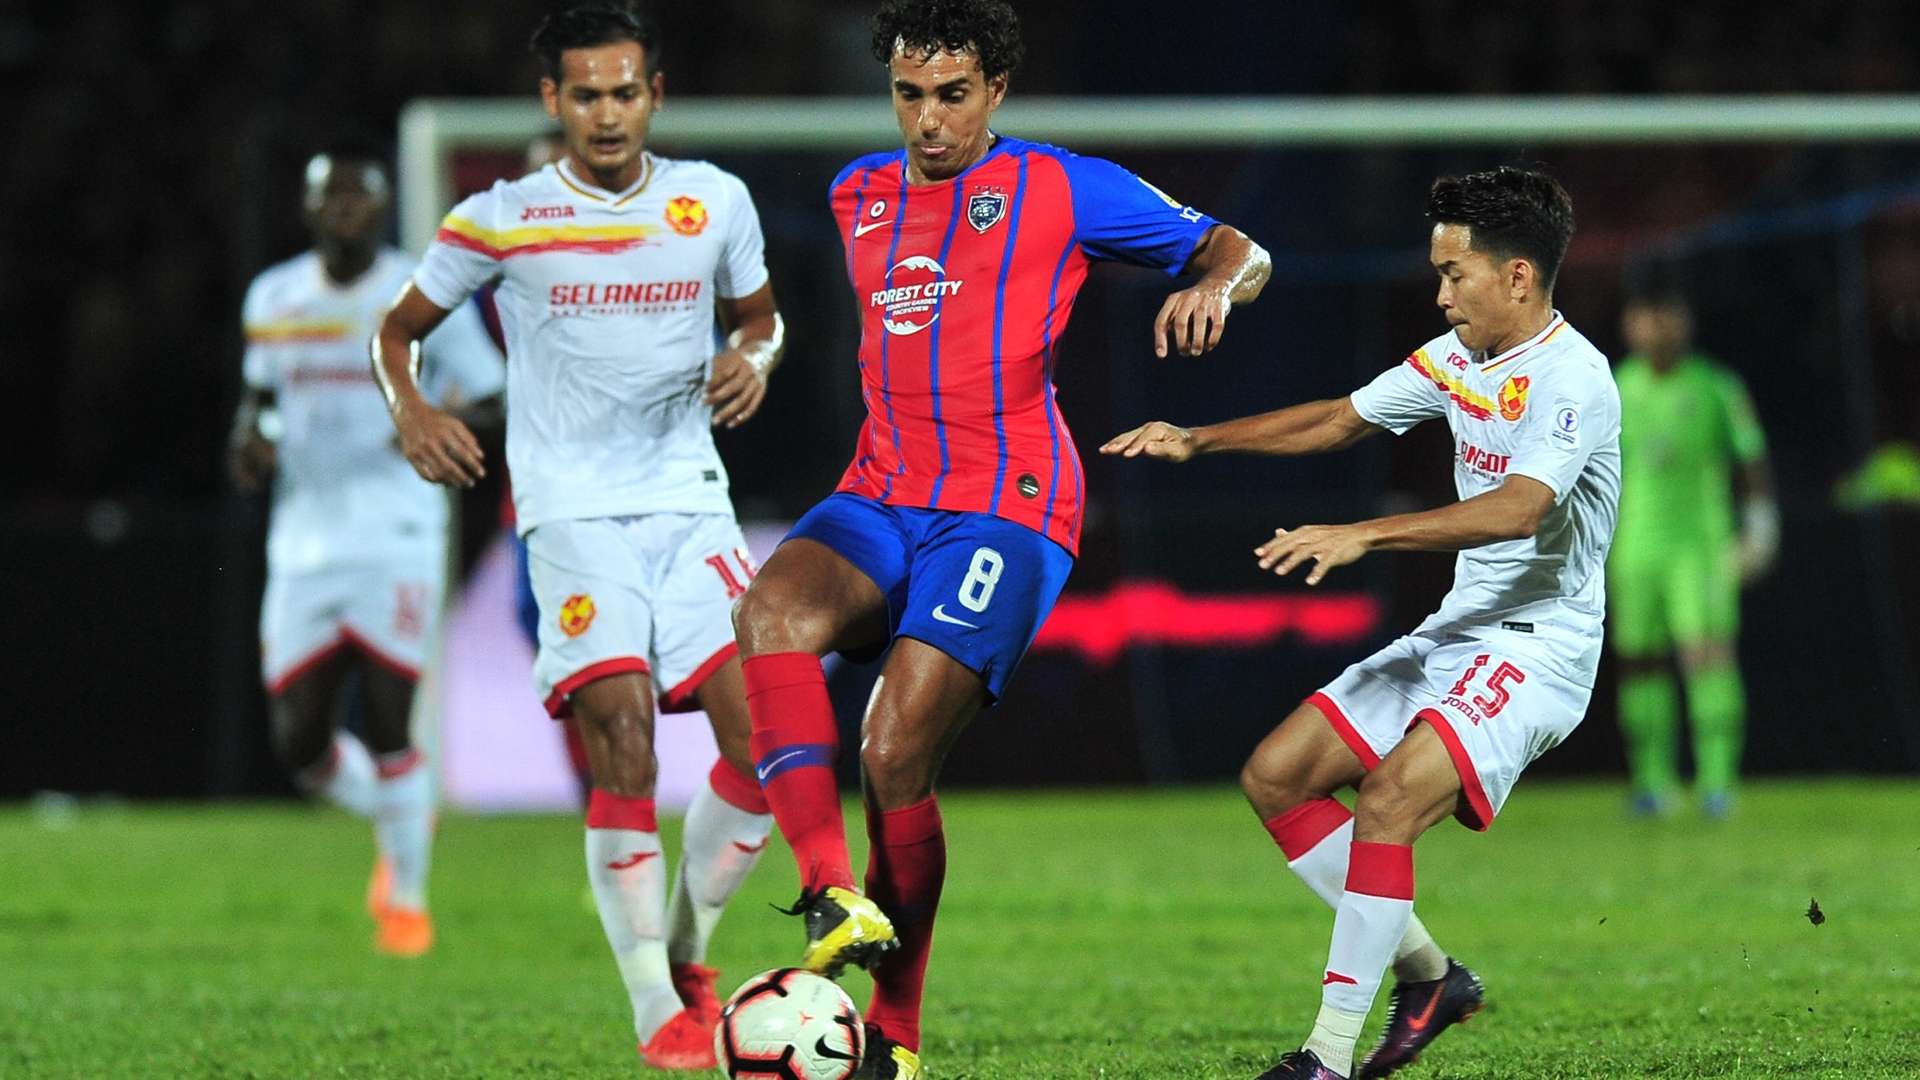 Diogo Luis Santo, Johor Darul Ta'zim v Selangor, Malaysia Super League, 19 Jun 2019